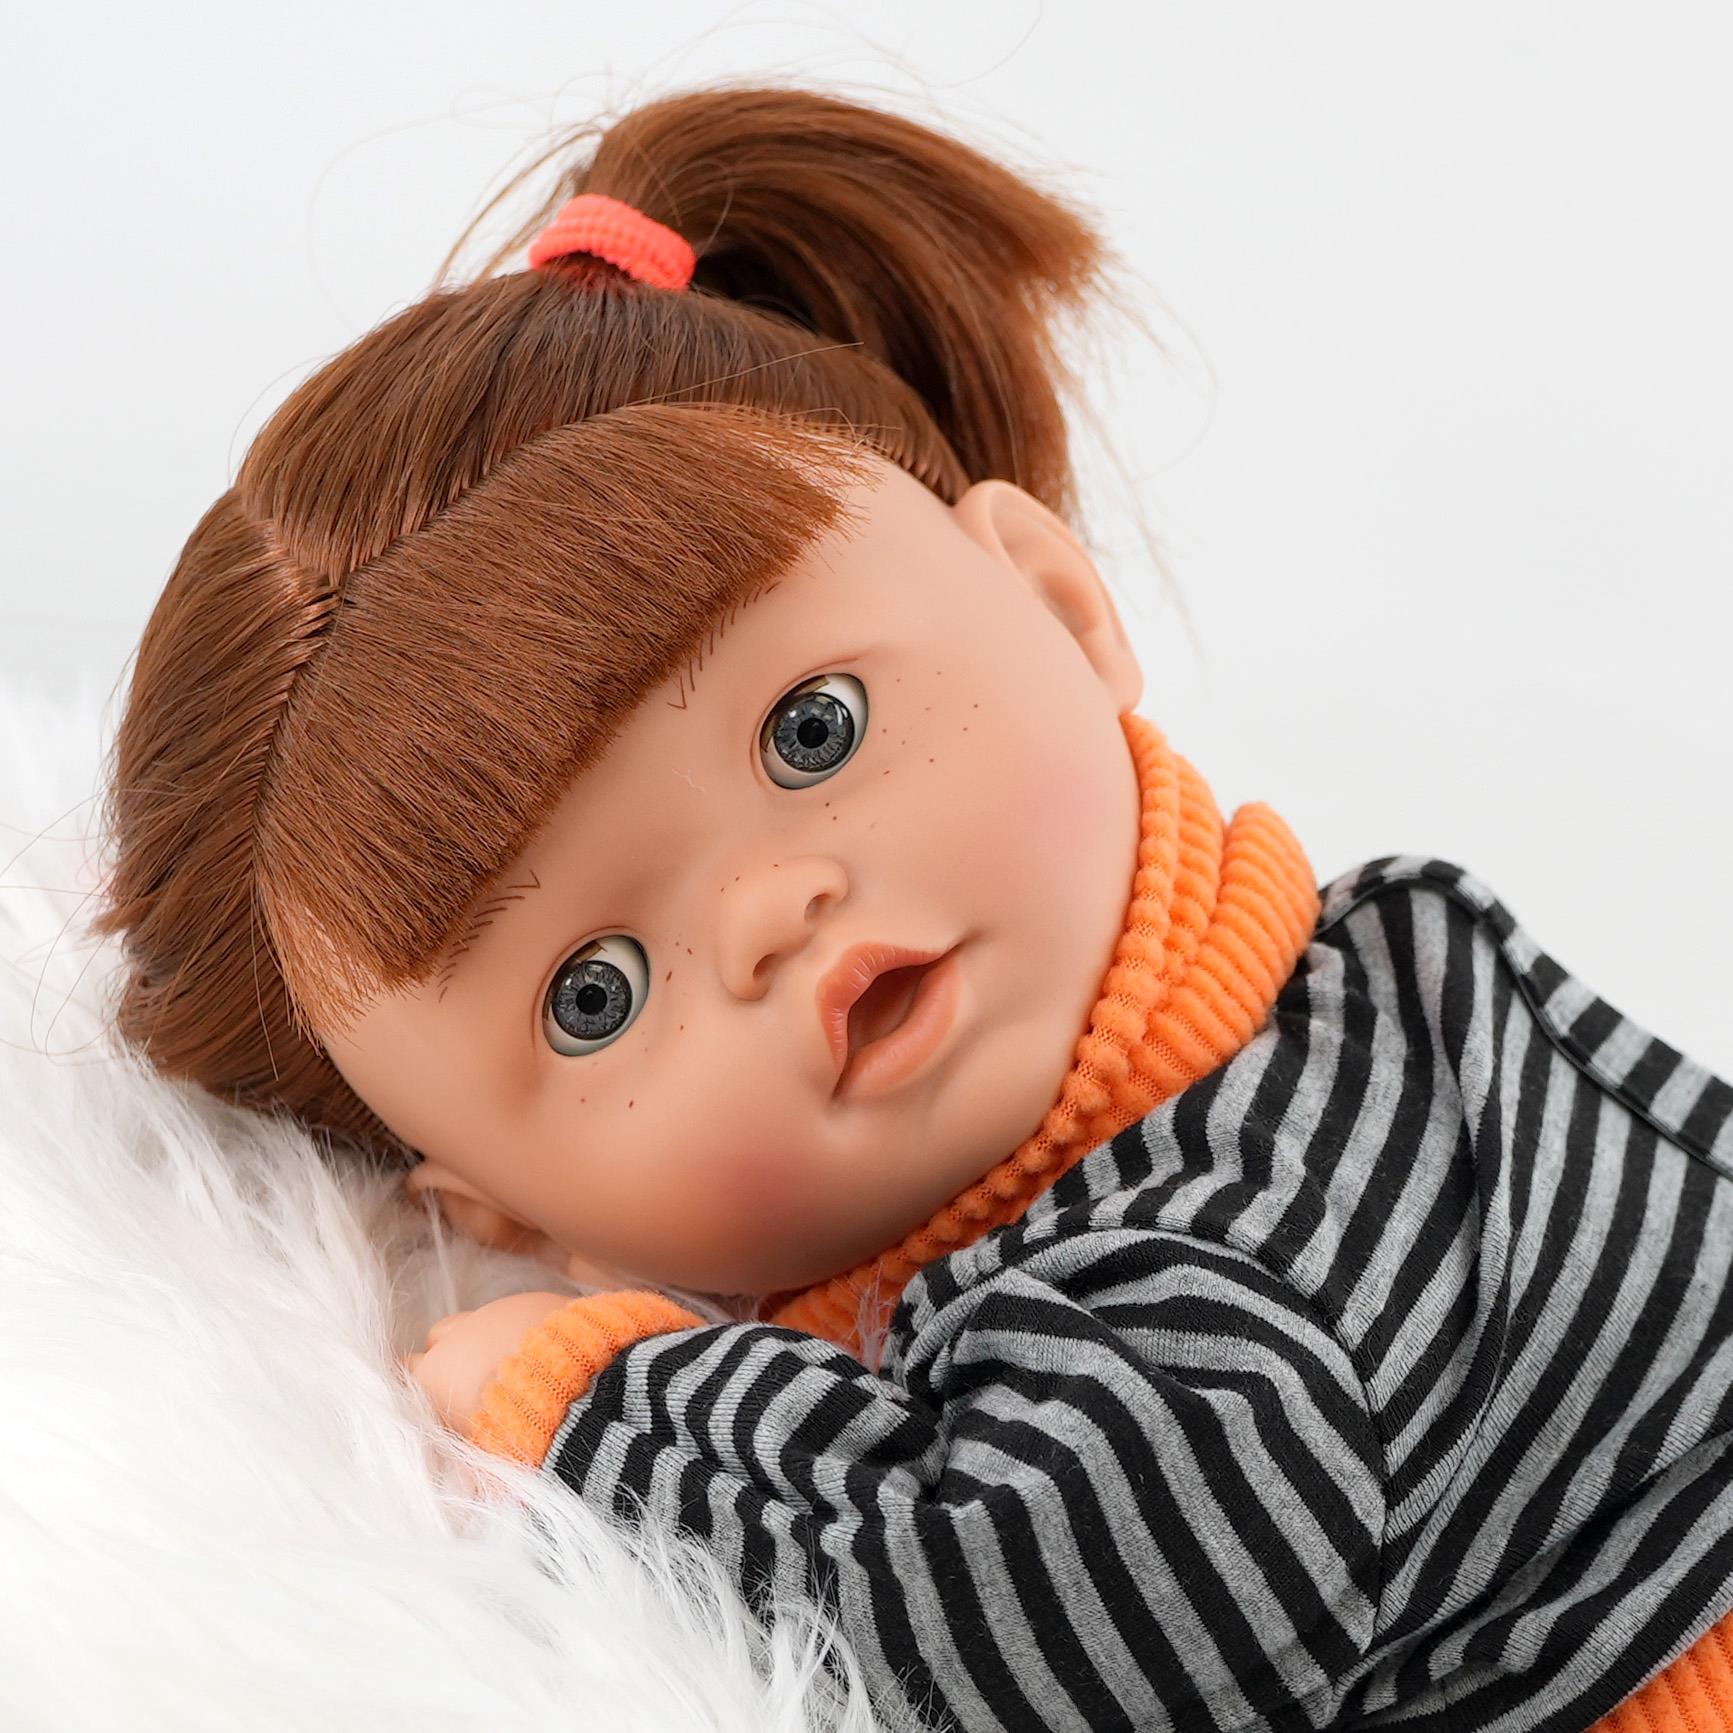 Sleeping Ginger Girl Dolls with Dummy & Sounds by BiBi Doll - UKBuyZone